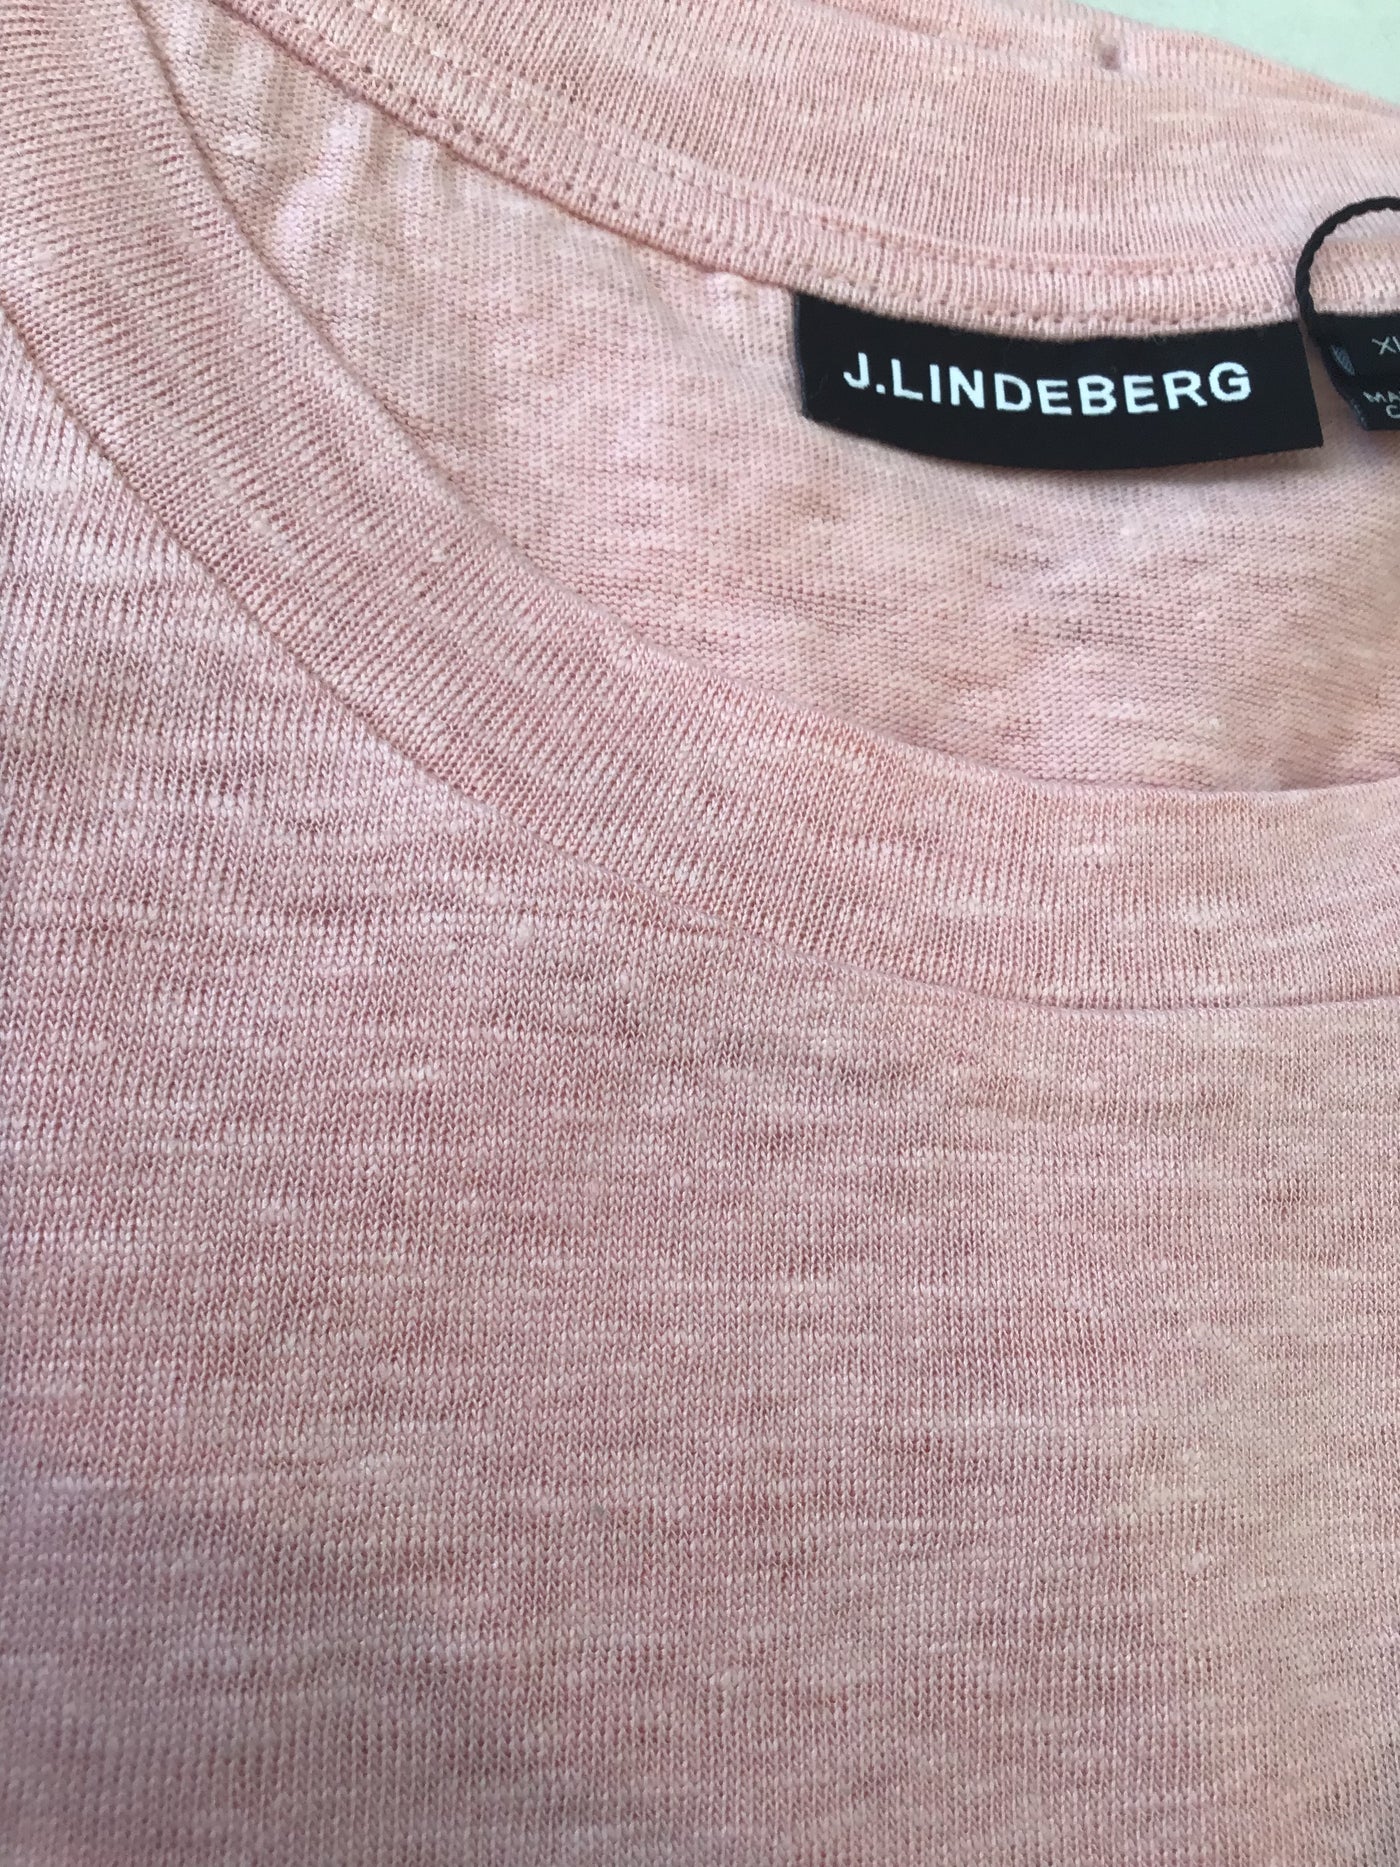 J. LINDEBERG Coma Linen Tee Pink